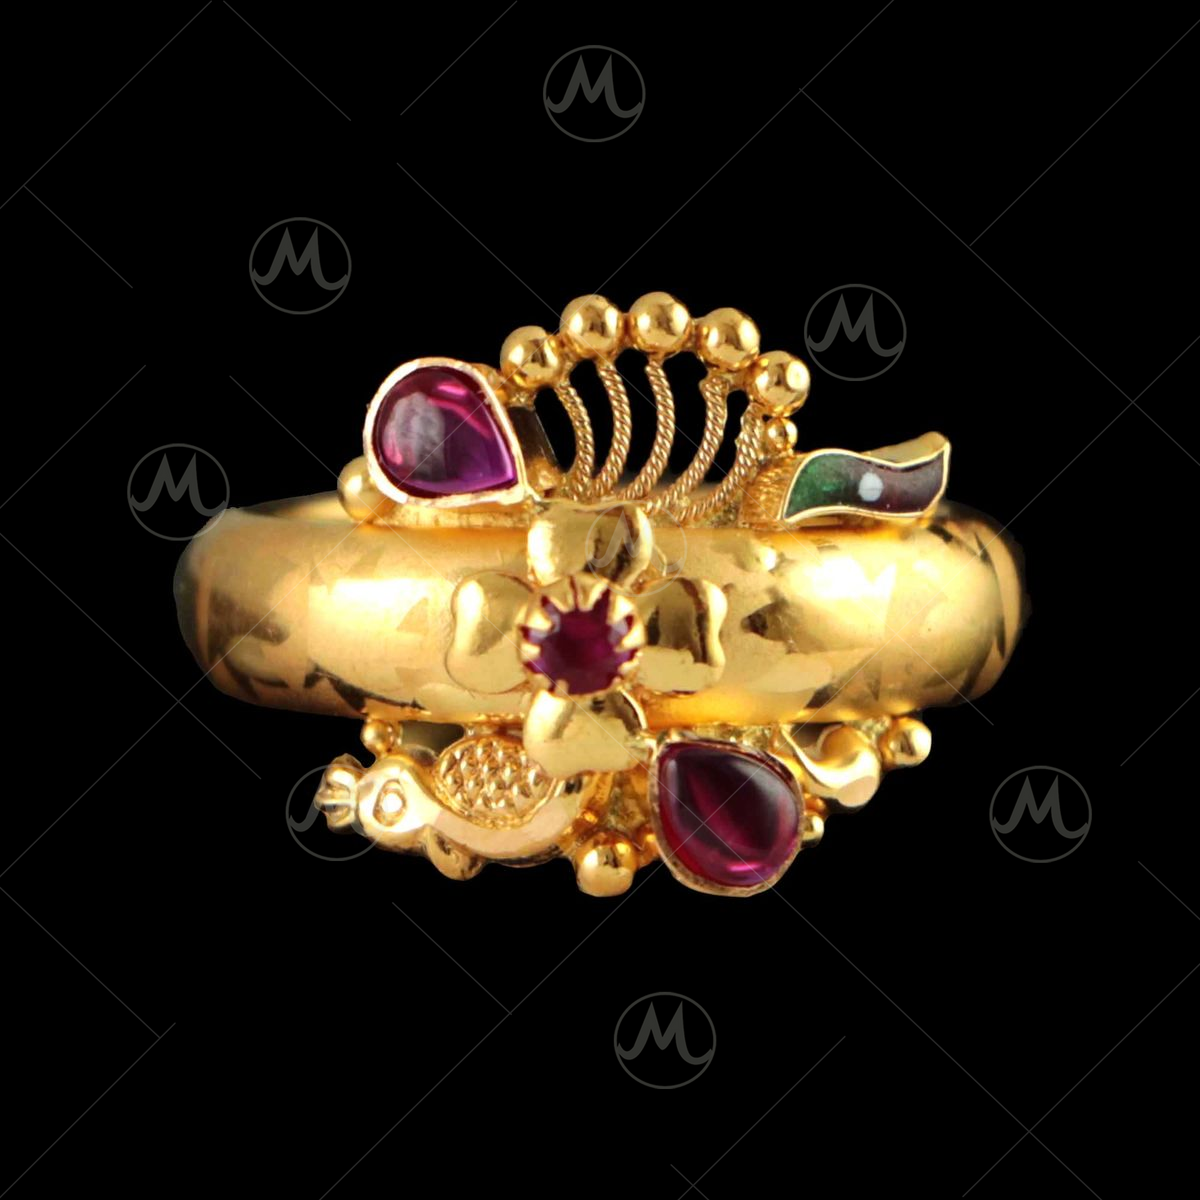 Buy 22Kt Plain Gold Fancy Ladies Finger Ring 93VR4643 Online from Vaibhav  Jewellers